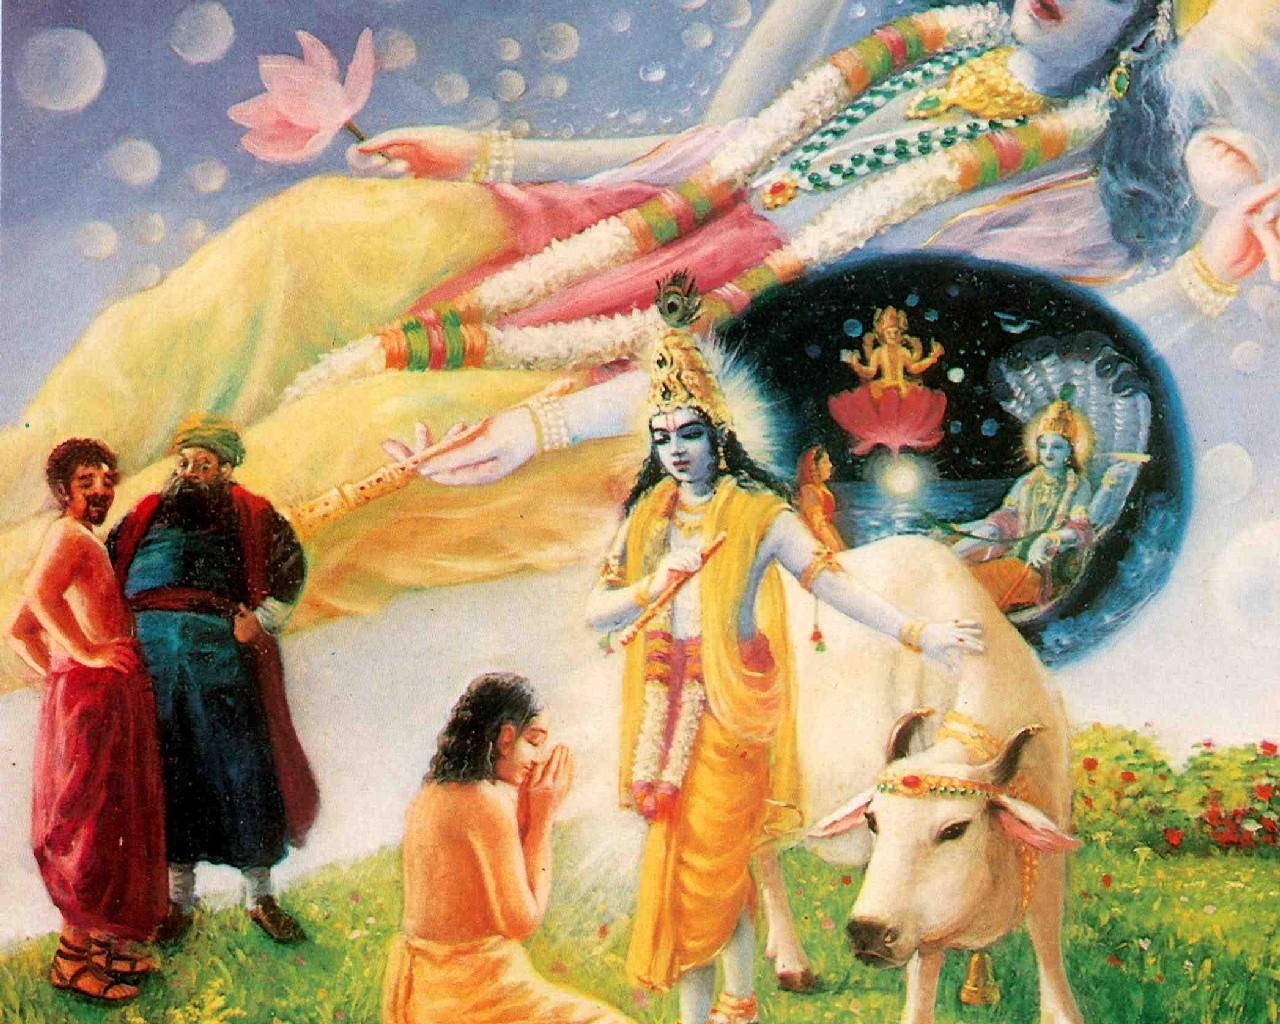 Caption: Divine Scene of Bhagavad Gita with Lord Vishnu Wallpaper